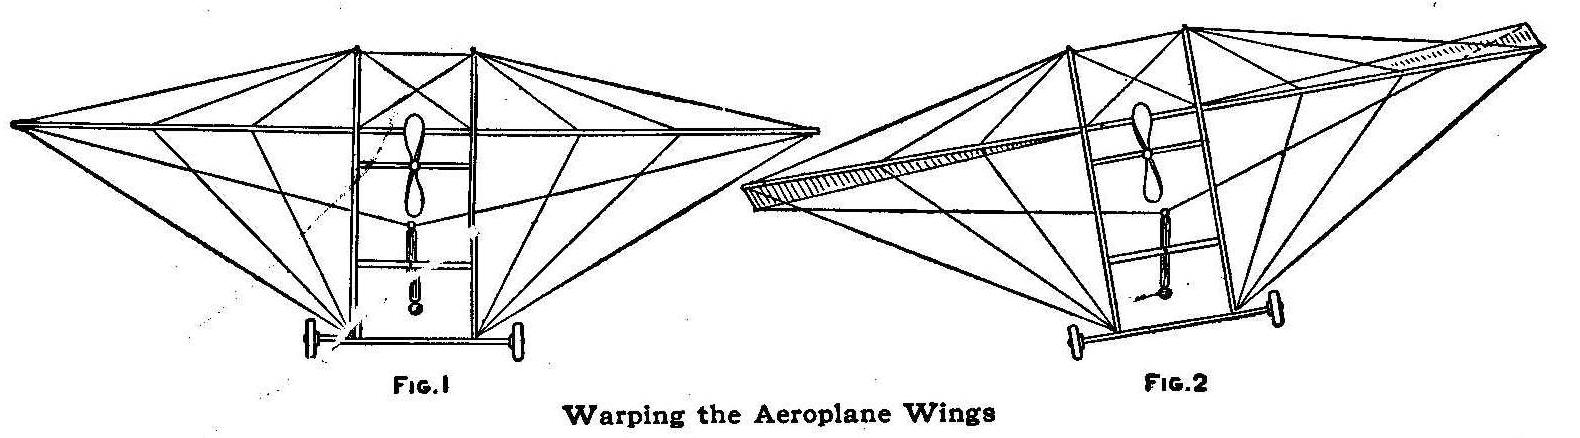 Warping the Aeroplane Wings